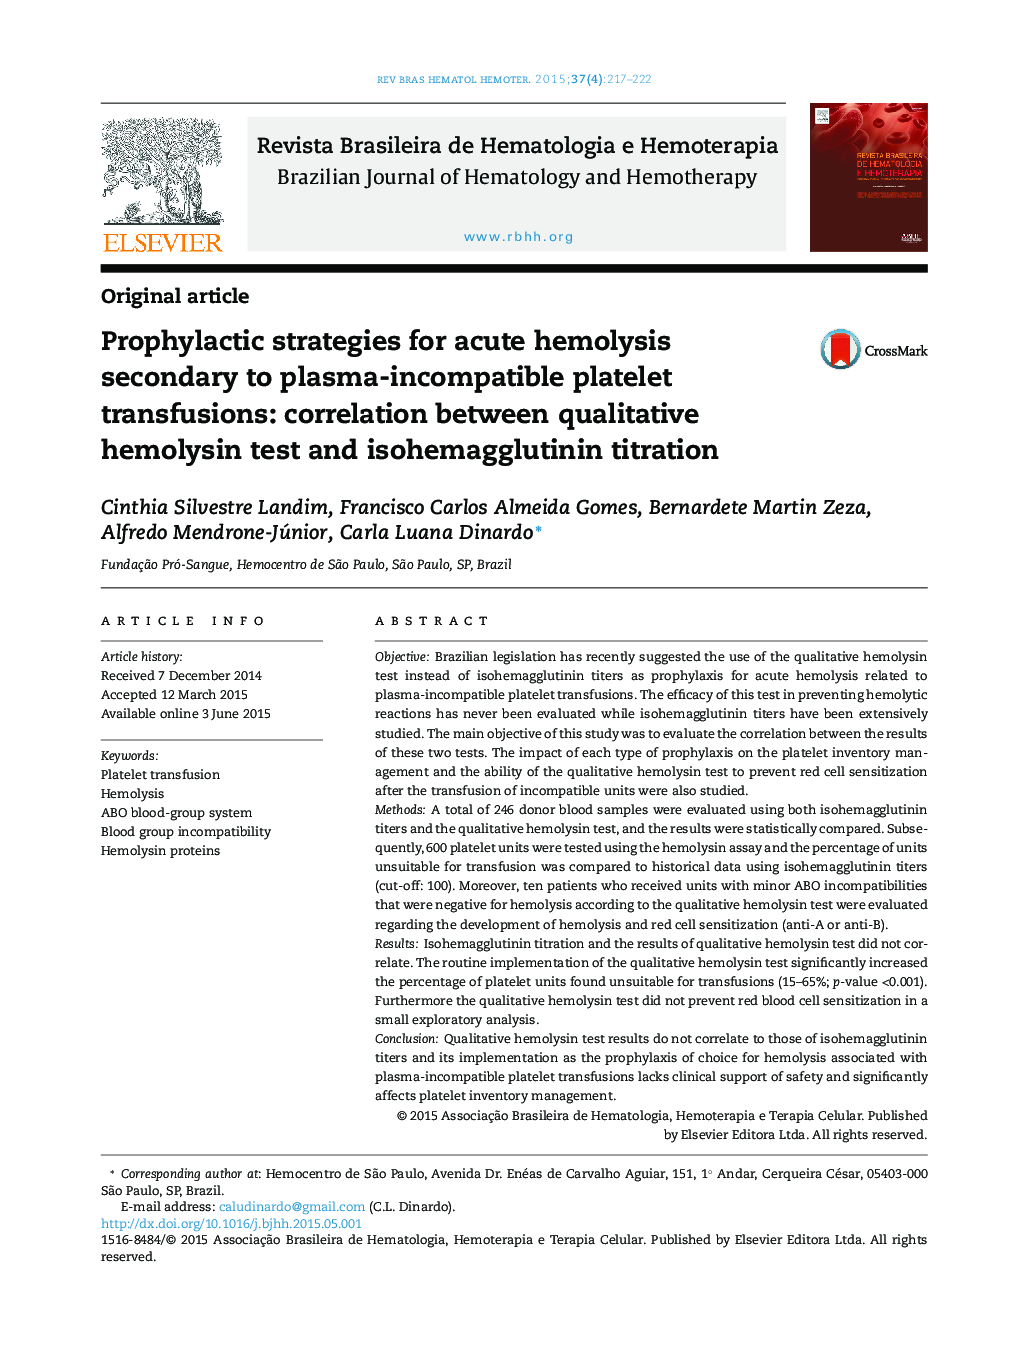 Prophylactic strategies for acute hemolysis secondary to plasma-incompatible platelet transfusions: correlation between qualitative hemolysin test and isohemagglutinin titration